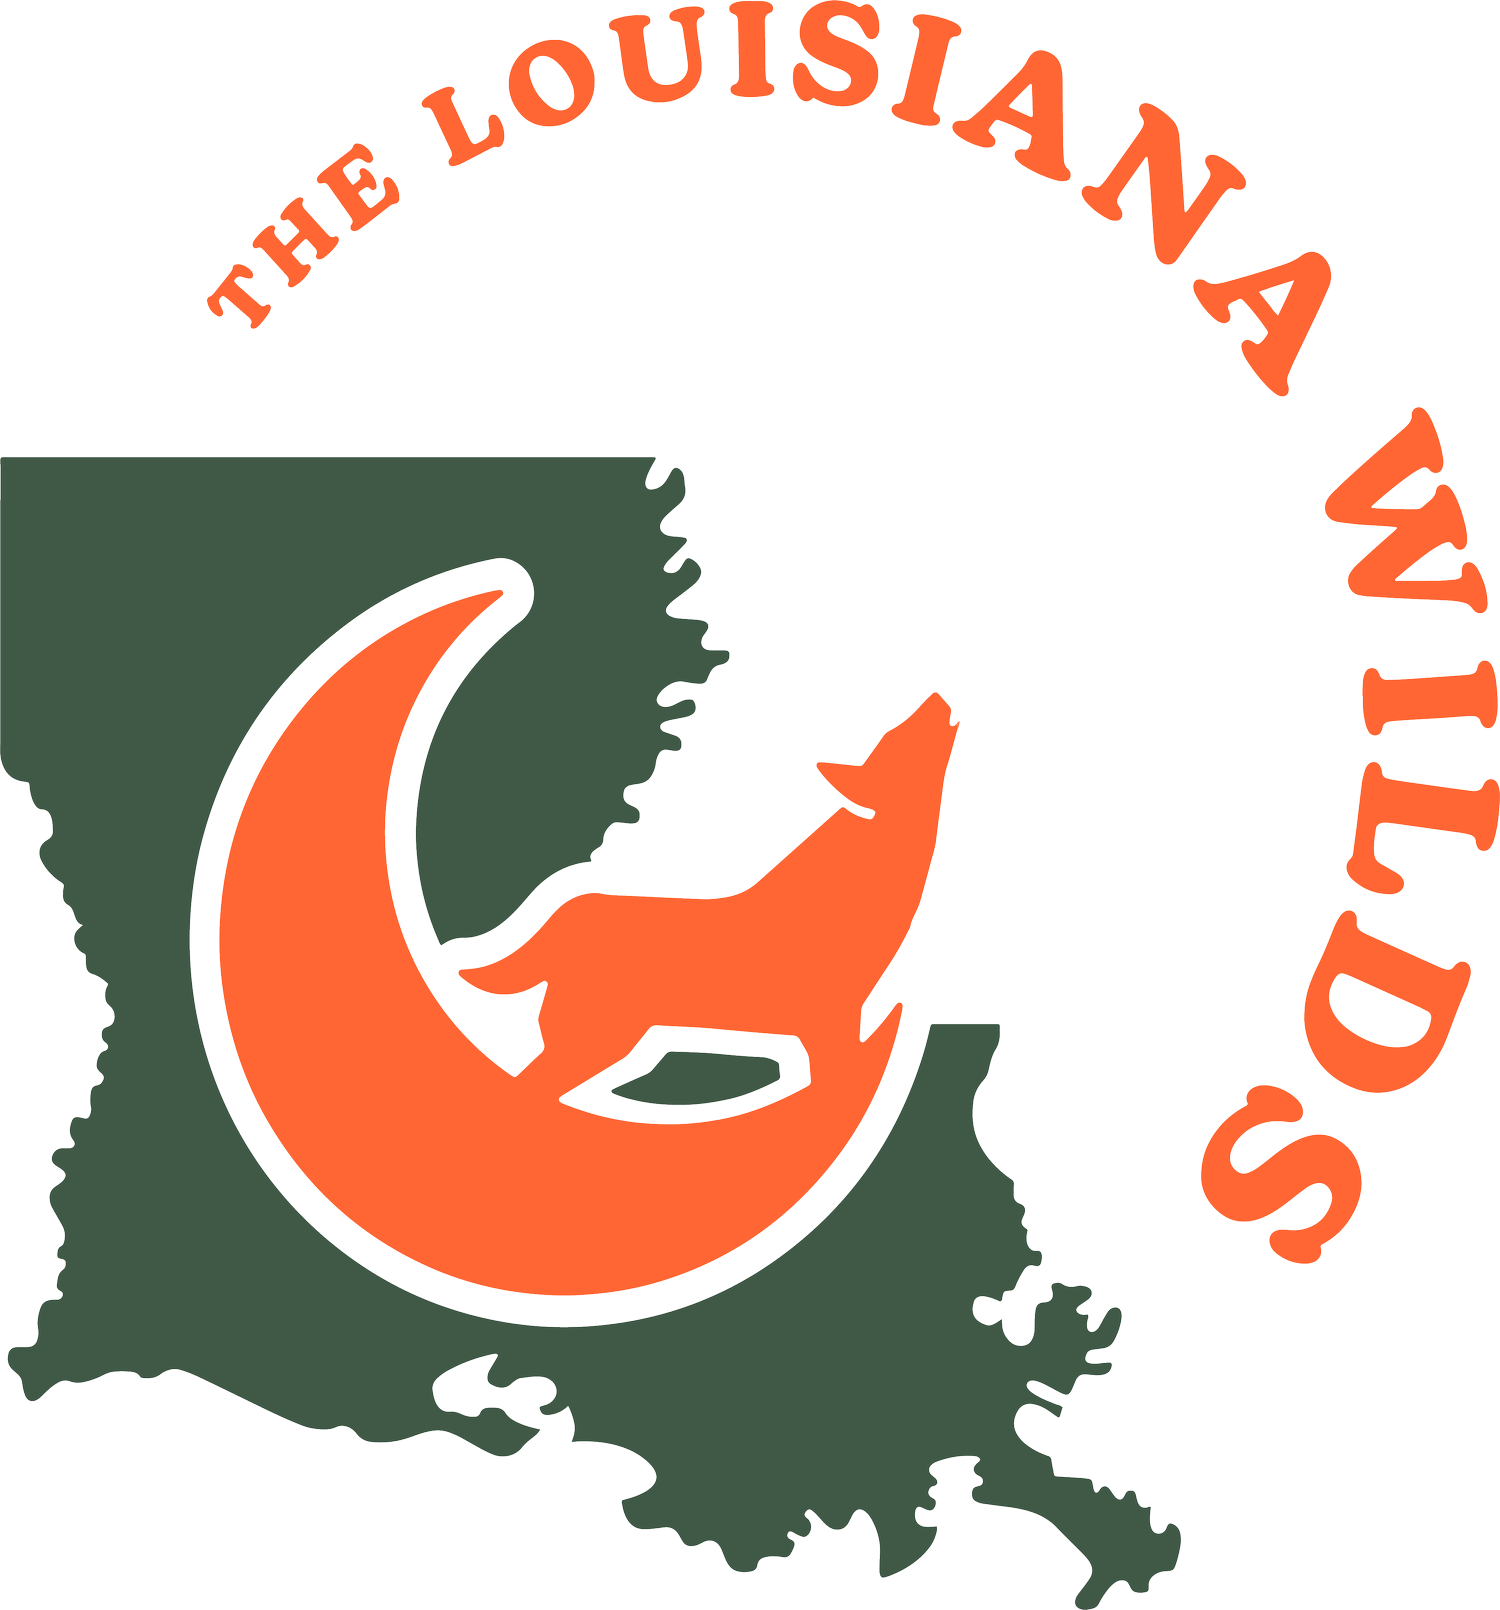 The Louisiana Wilds